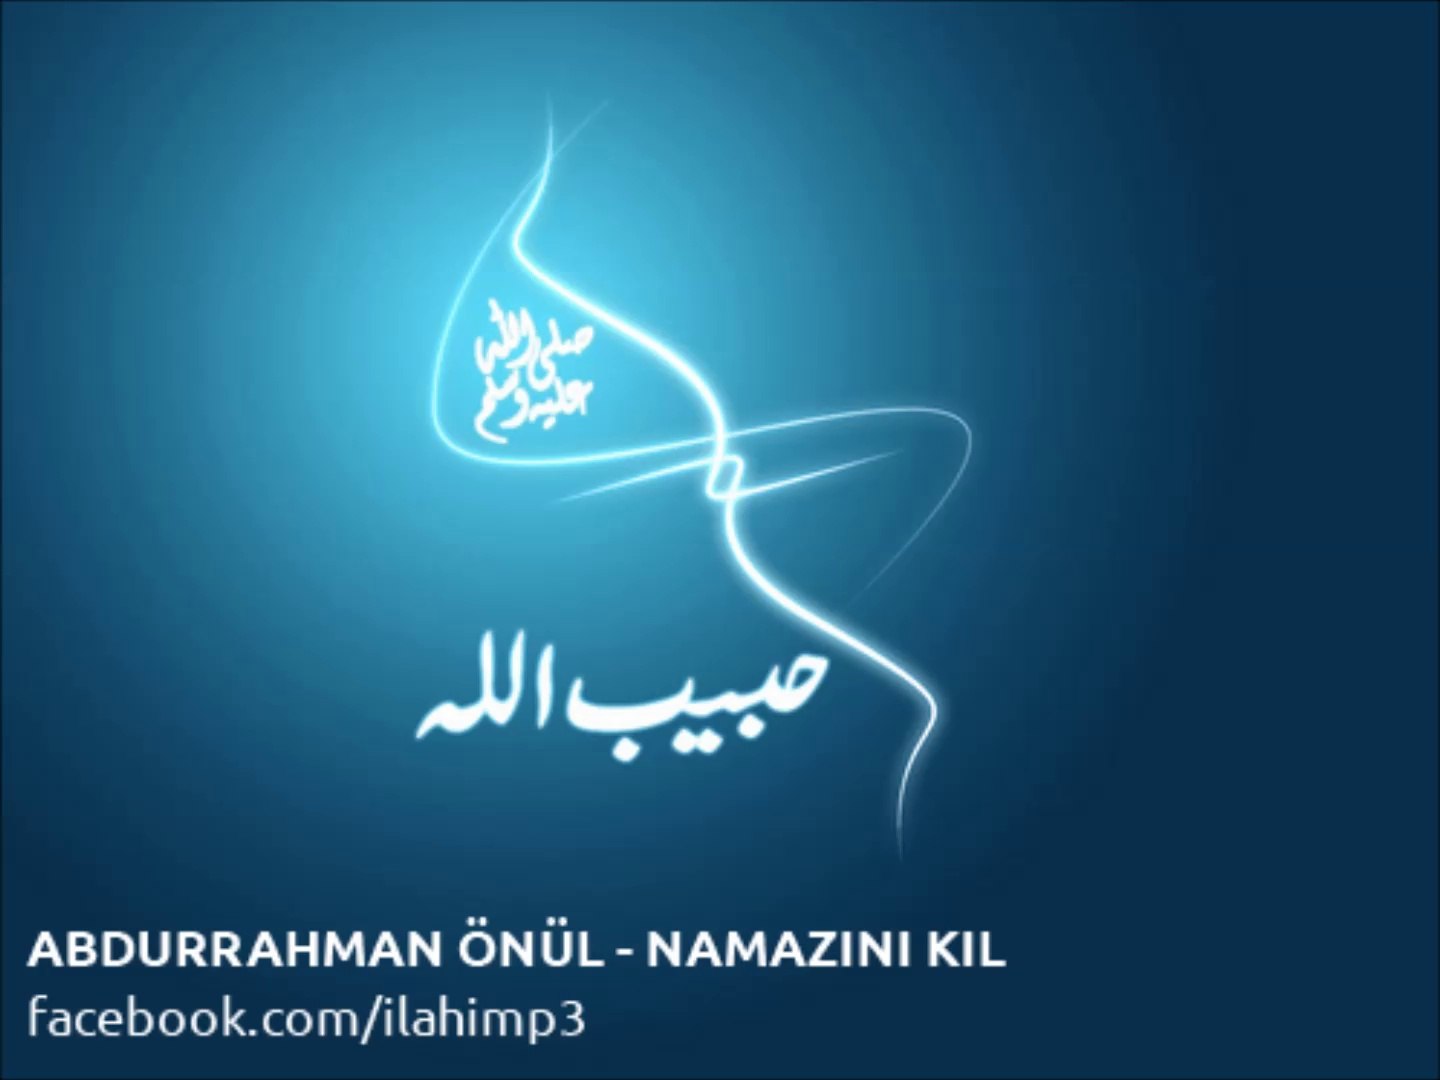 ABDURRAHMAN ÖNÜL - NAMAZINI KIL - Dailymotion Video